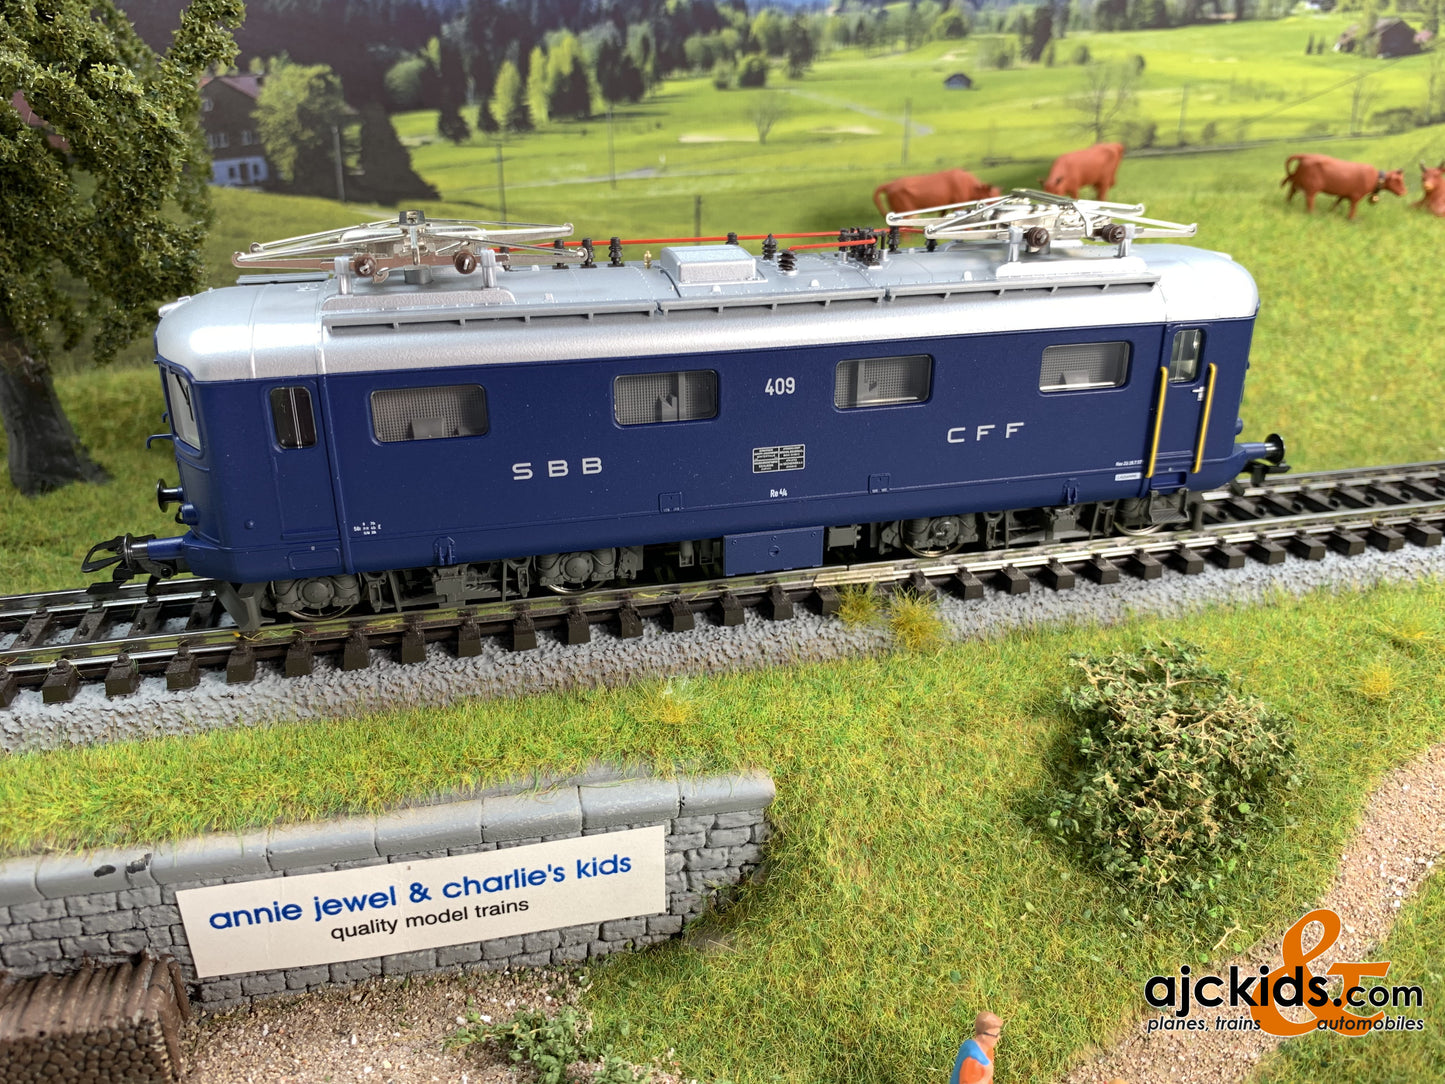 Trix 22422 - Class Re 4/4 I Electric Locomotive